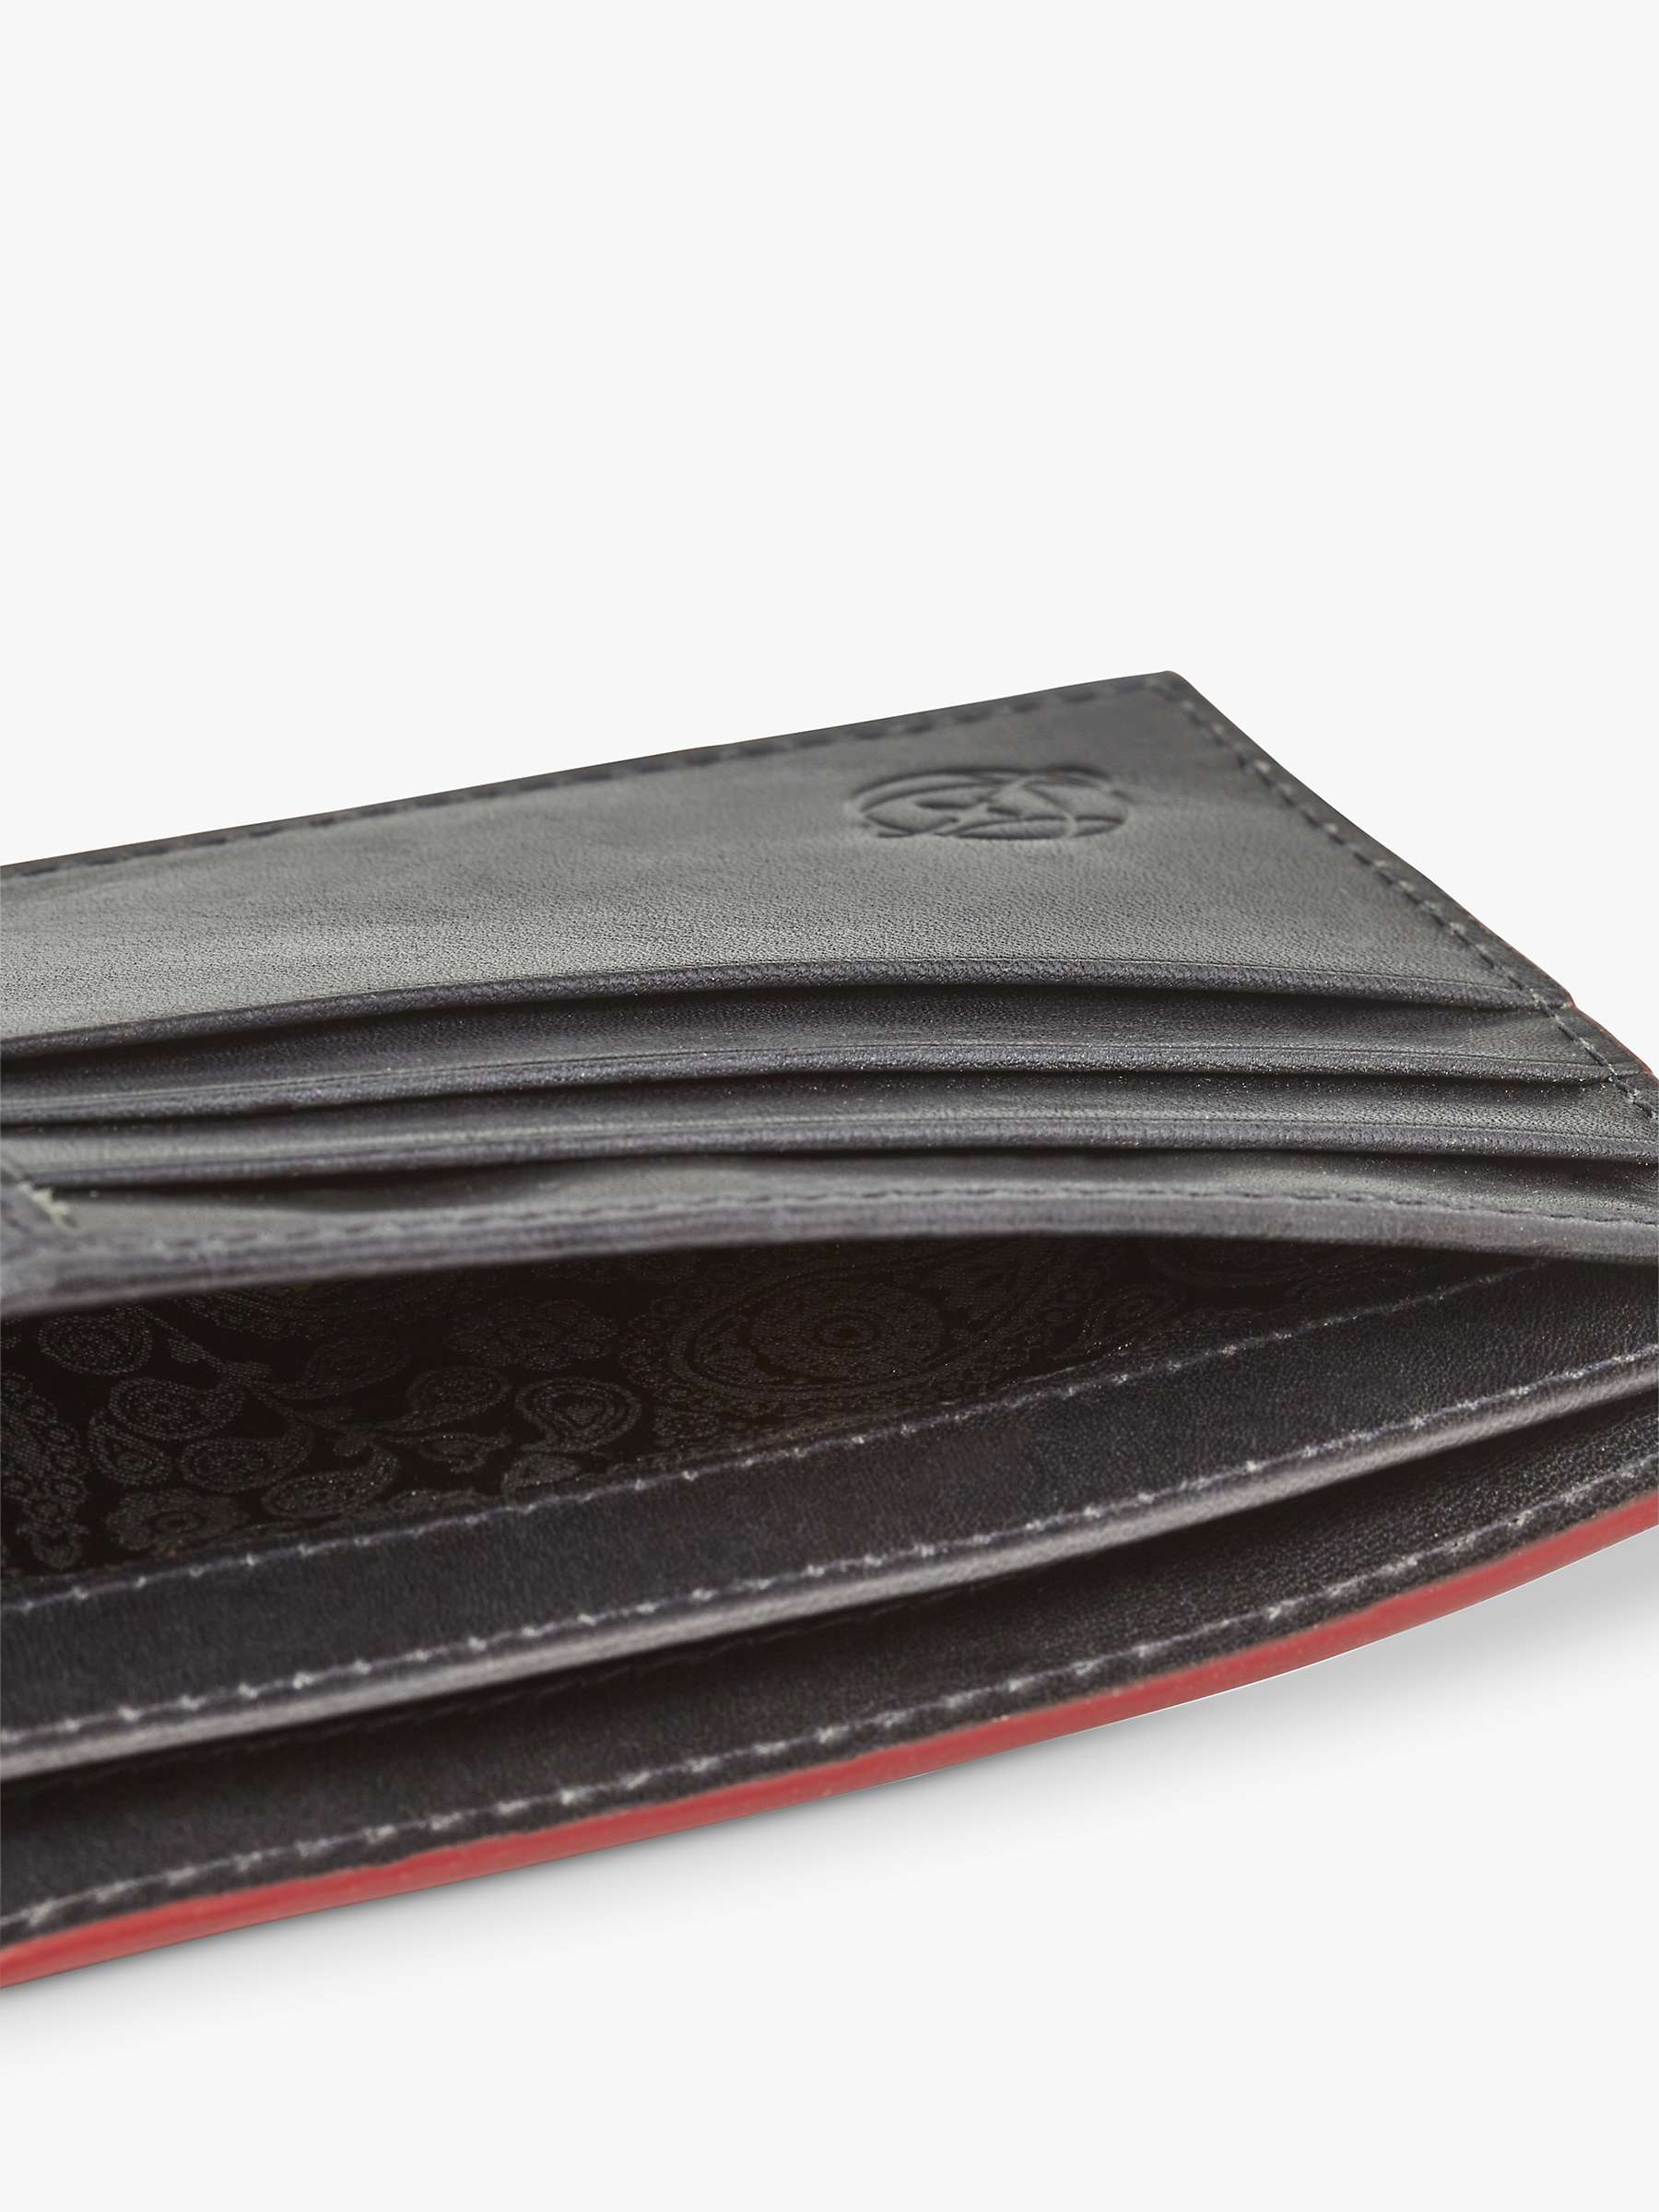 Buy Simon Carter Edge Leather Wallet Online at johnlewis.com